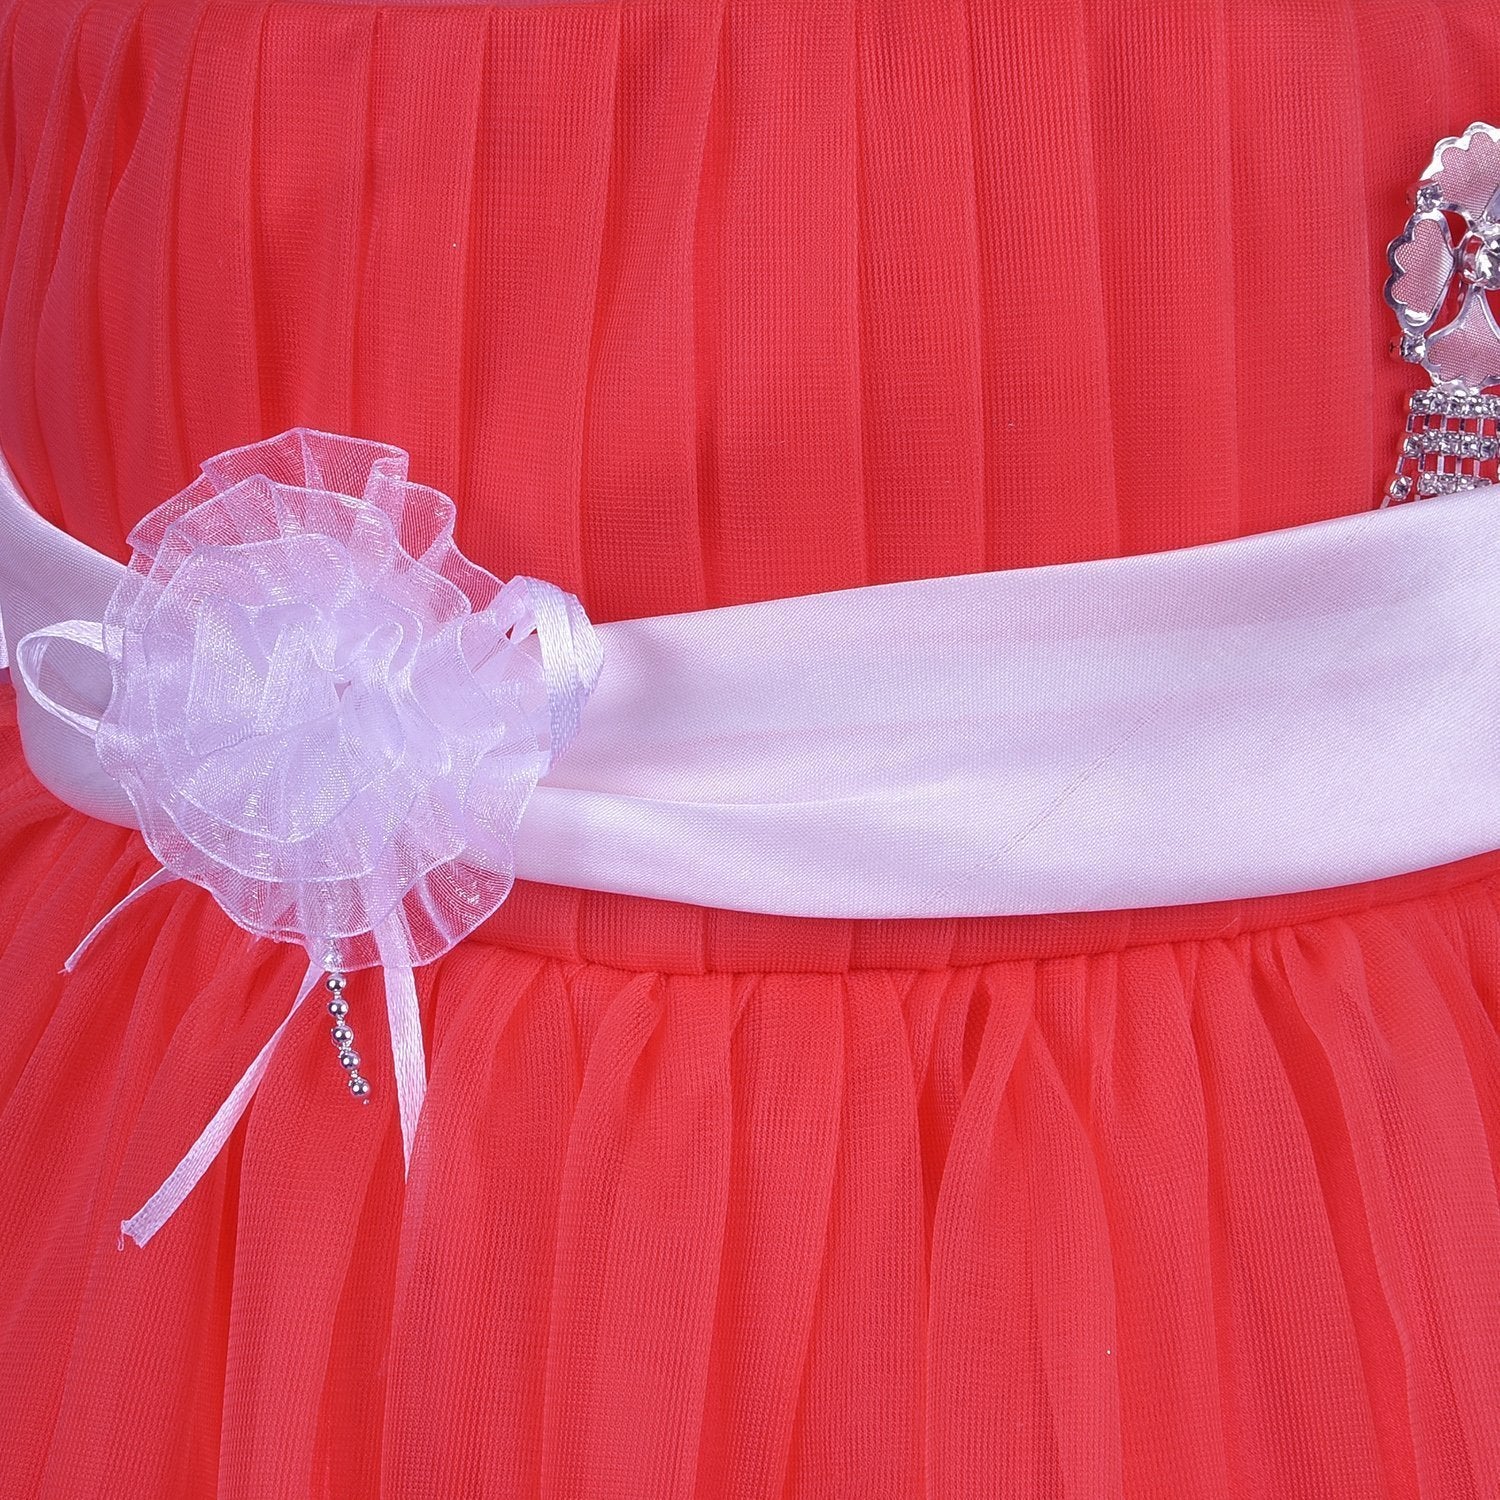 Baby Girls Party Wear Frock Dress Fr1014t -  Wish Karo Dresses